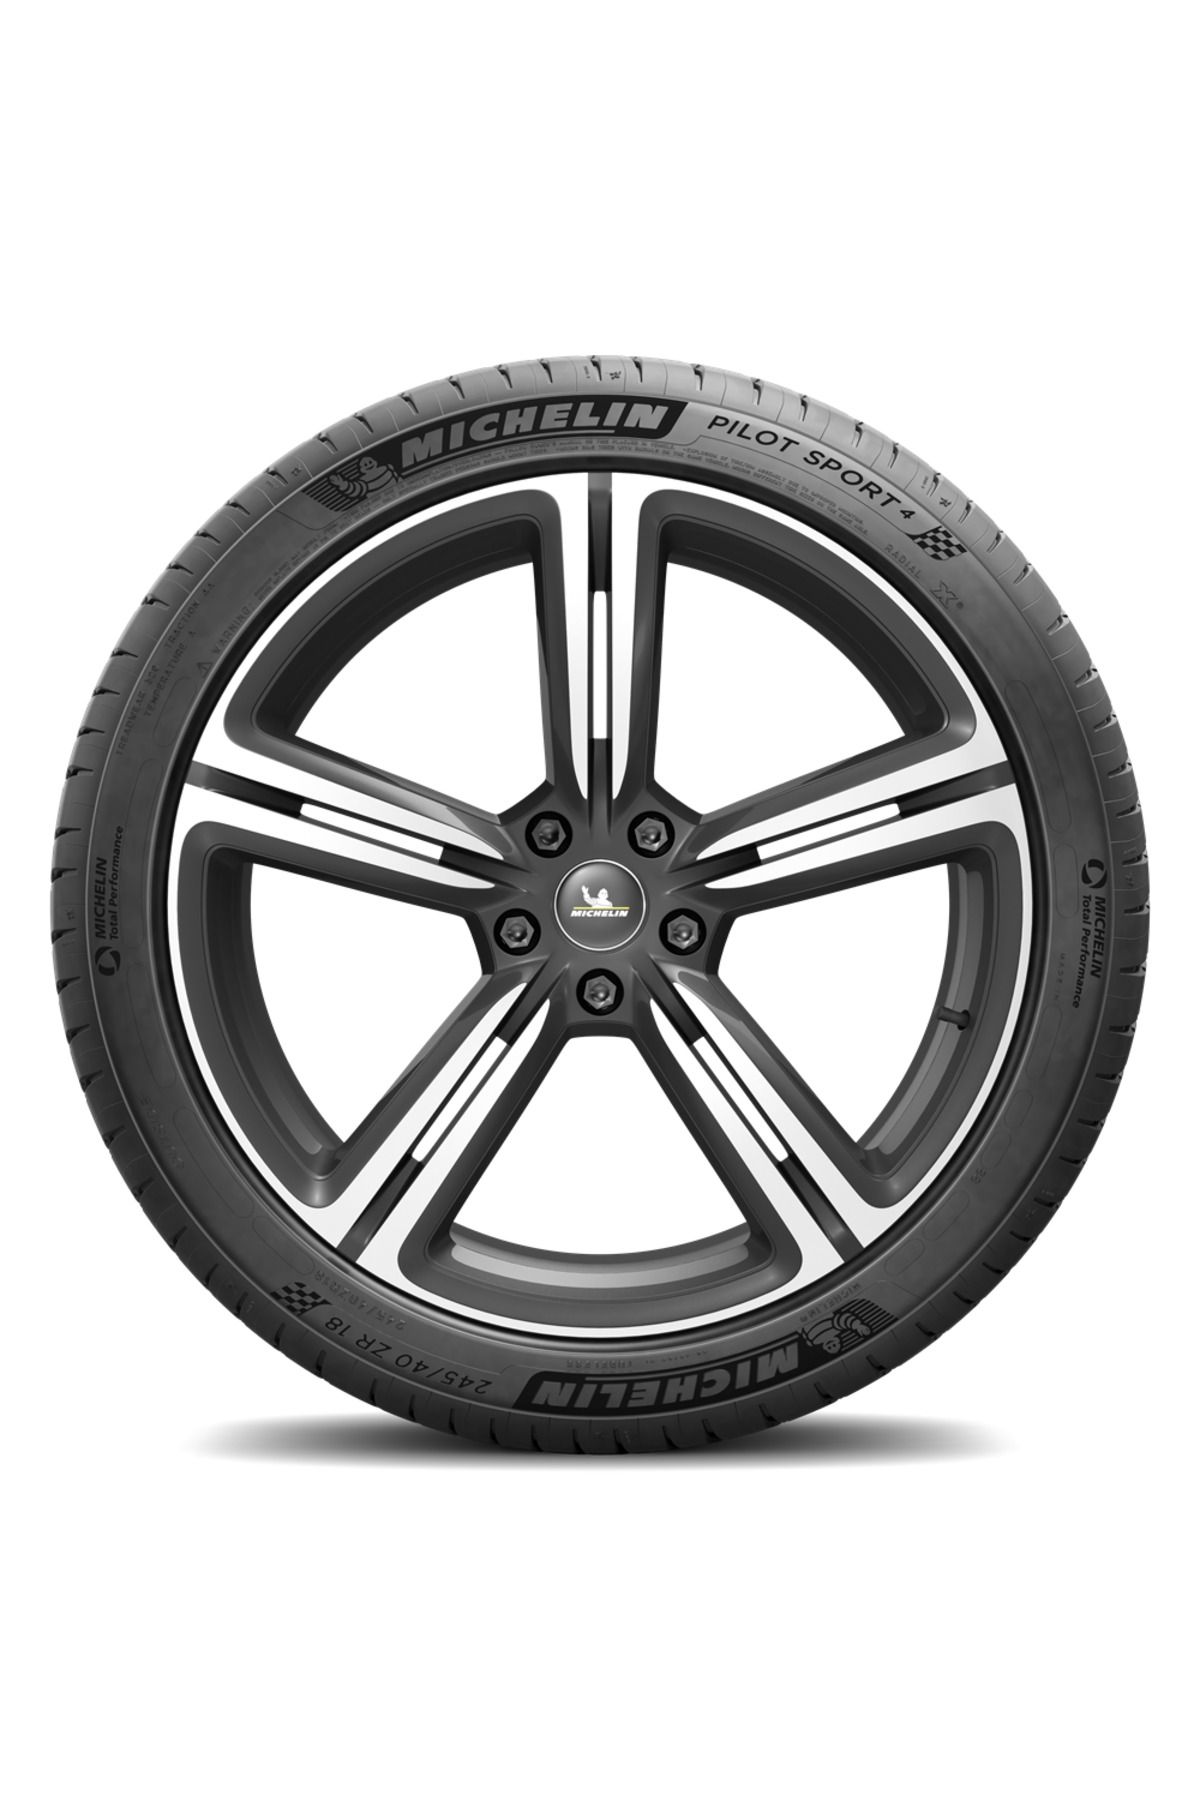 Michelin 215/50 R 17 95y Xl Pılot Sport 4 Otomobil Yazlık(ÜRETİM 2023)